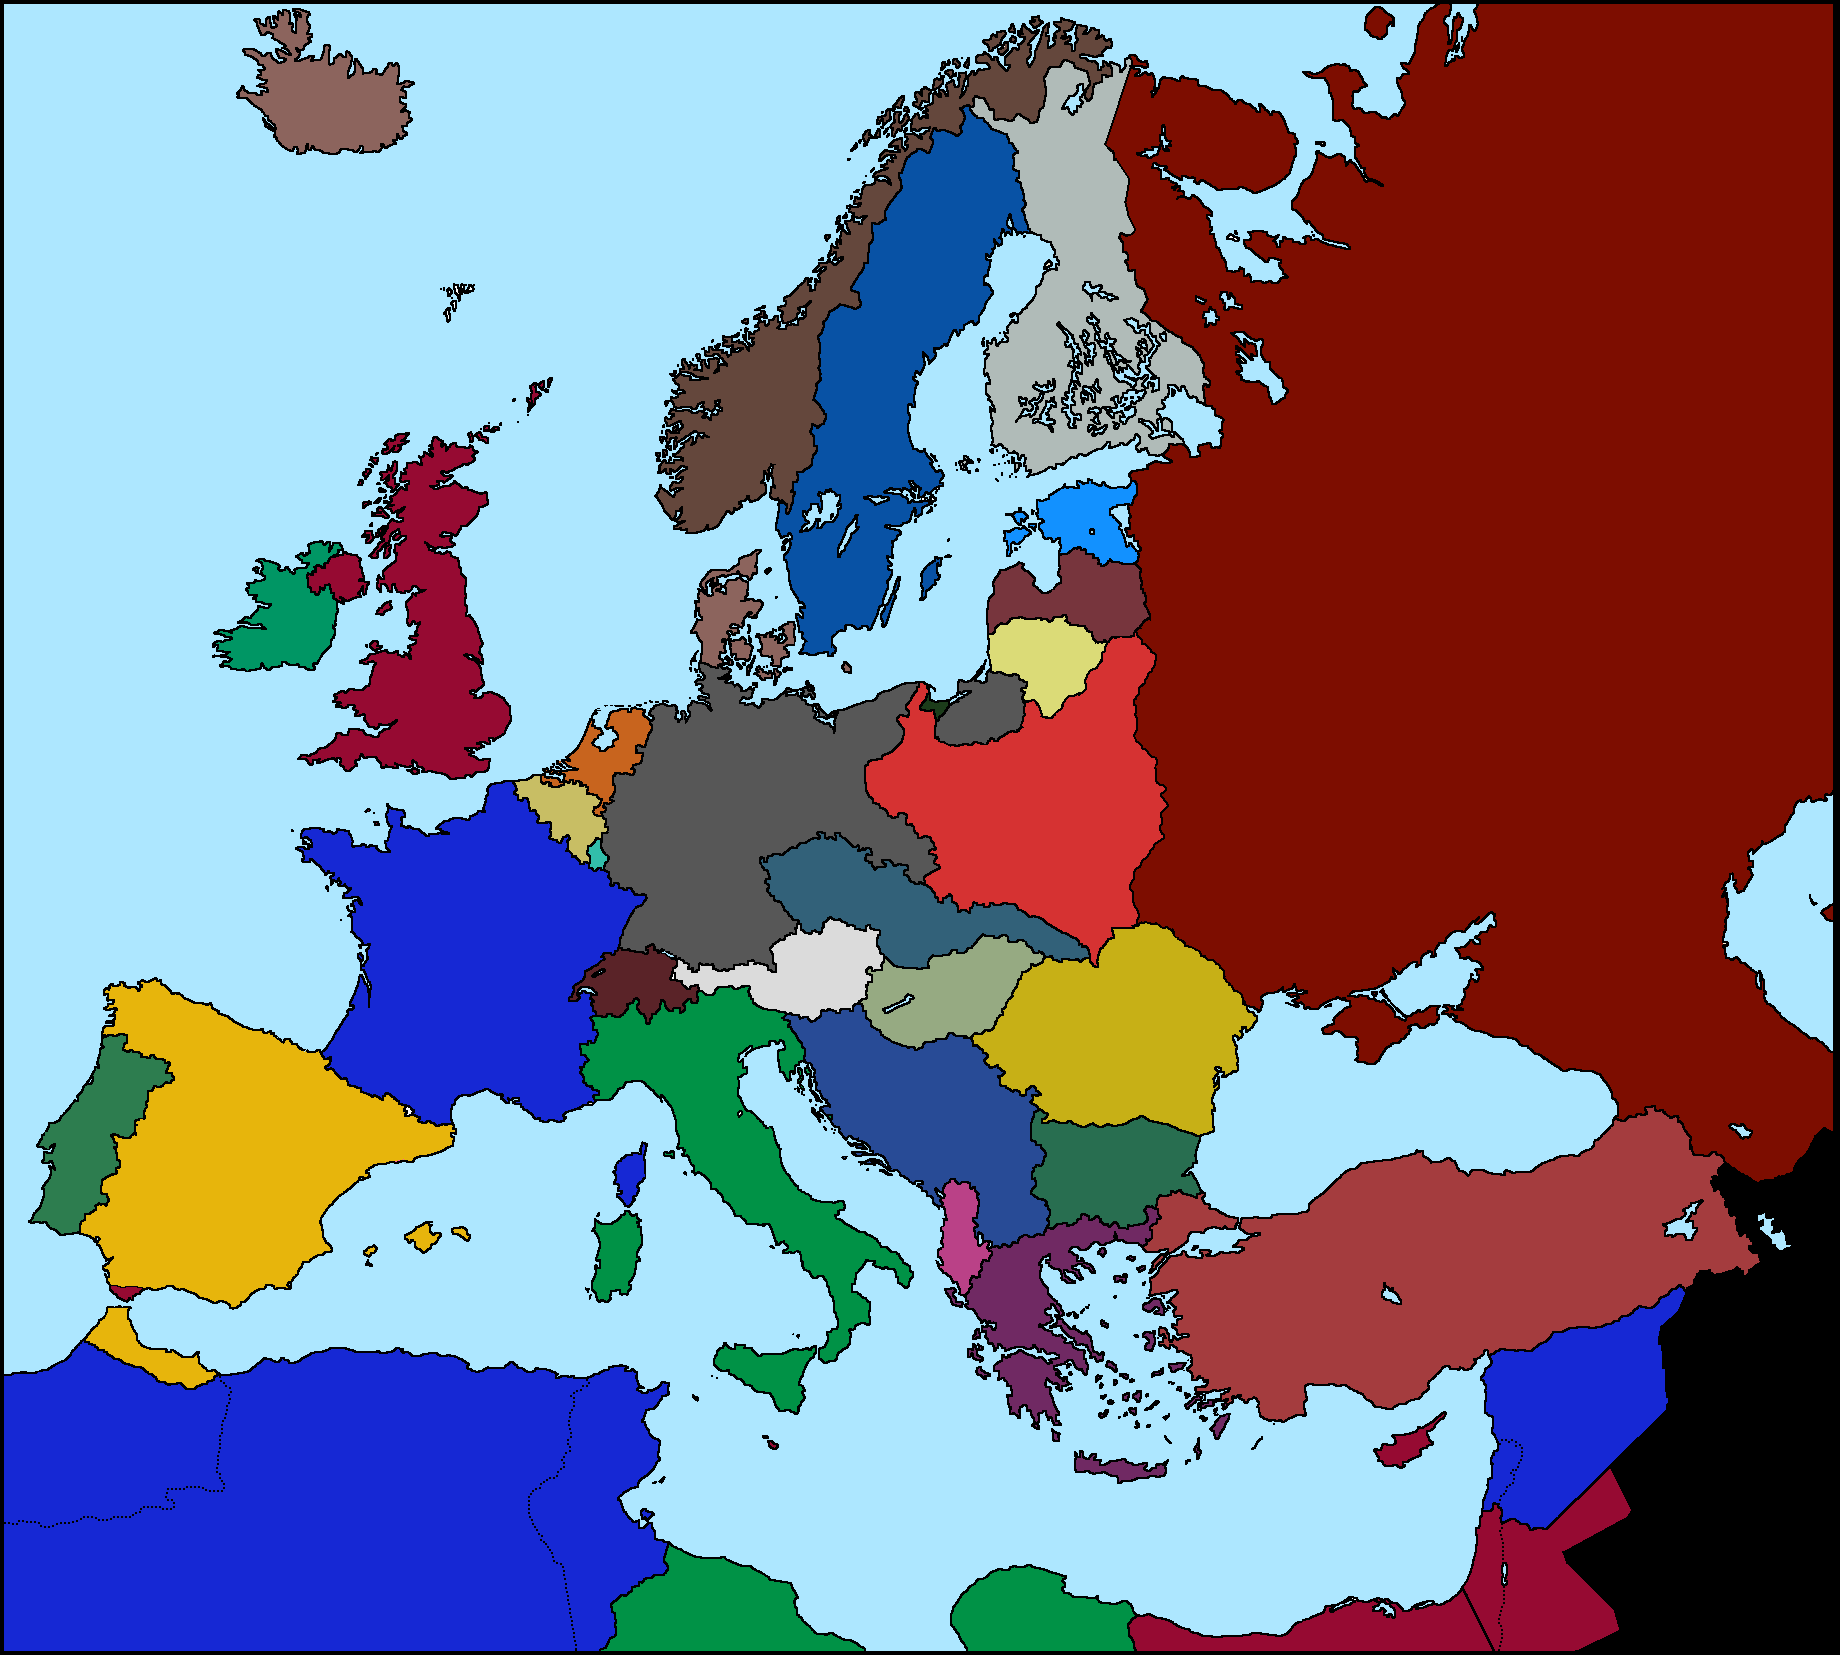 Map Of Europe 1936 | CVFLVBP